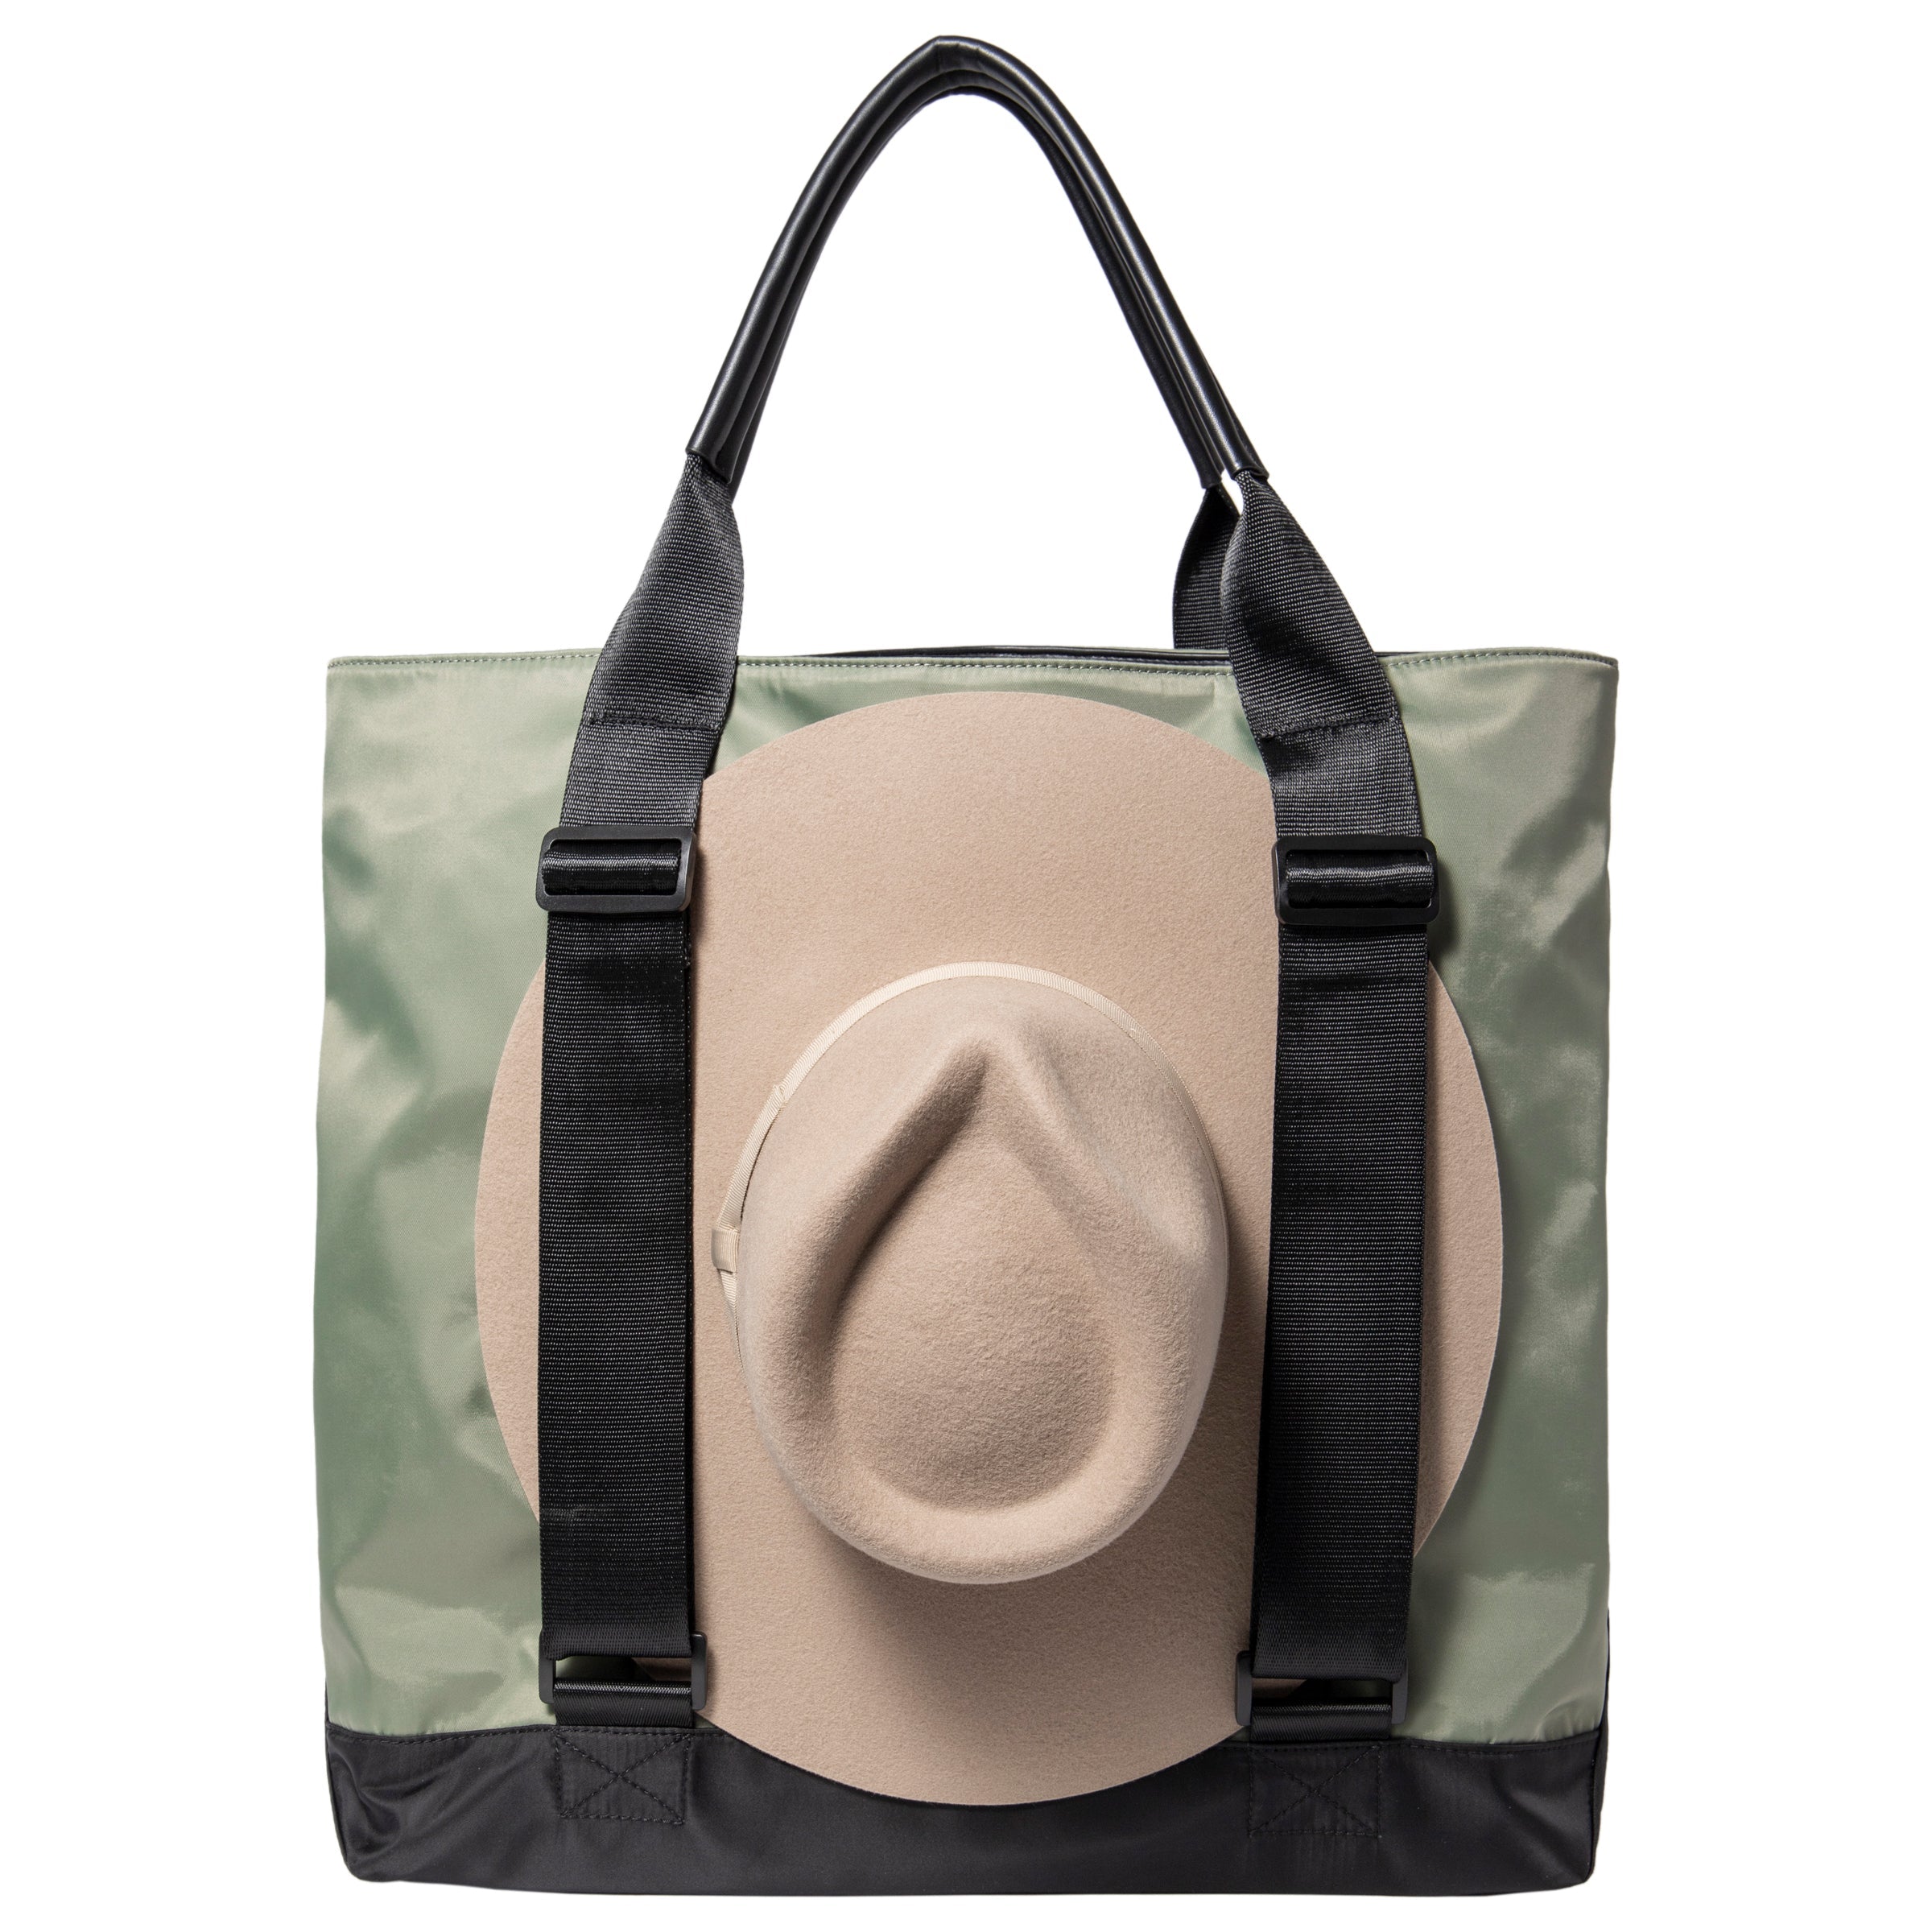 On Holiday - Hat Travel Tote Bag, Hat carrier bag